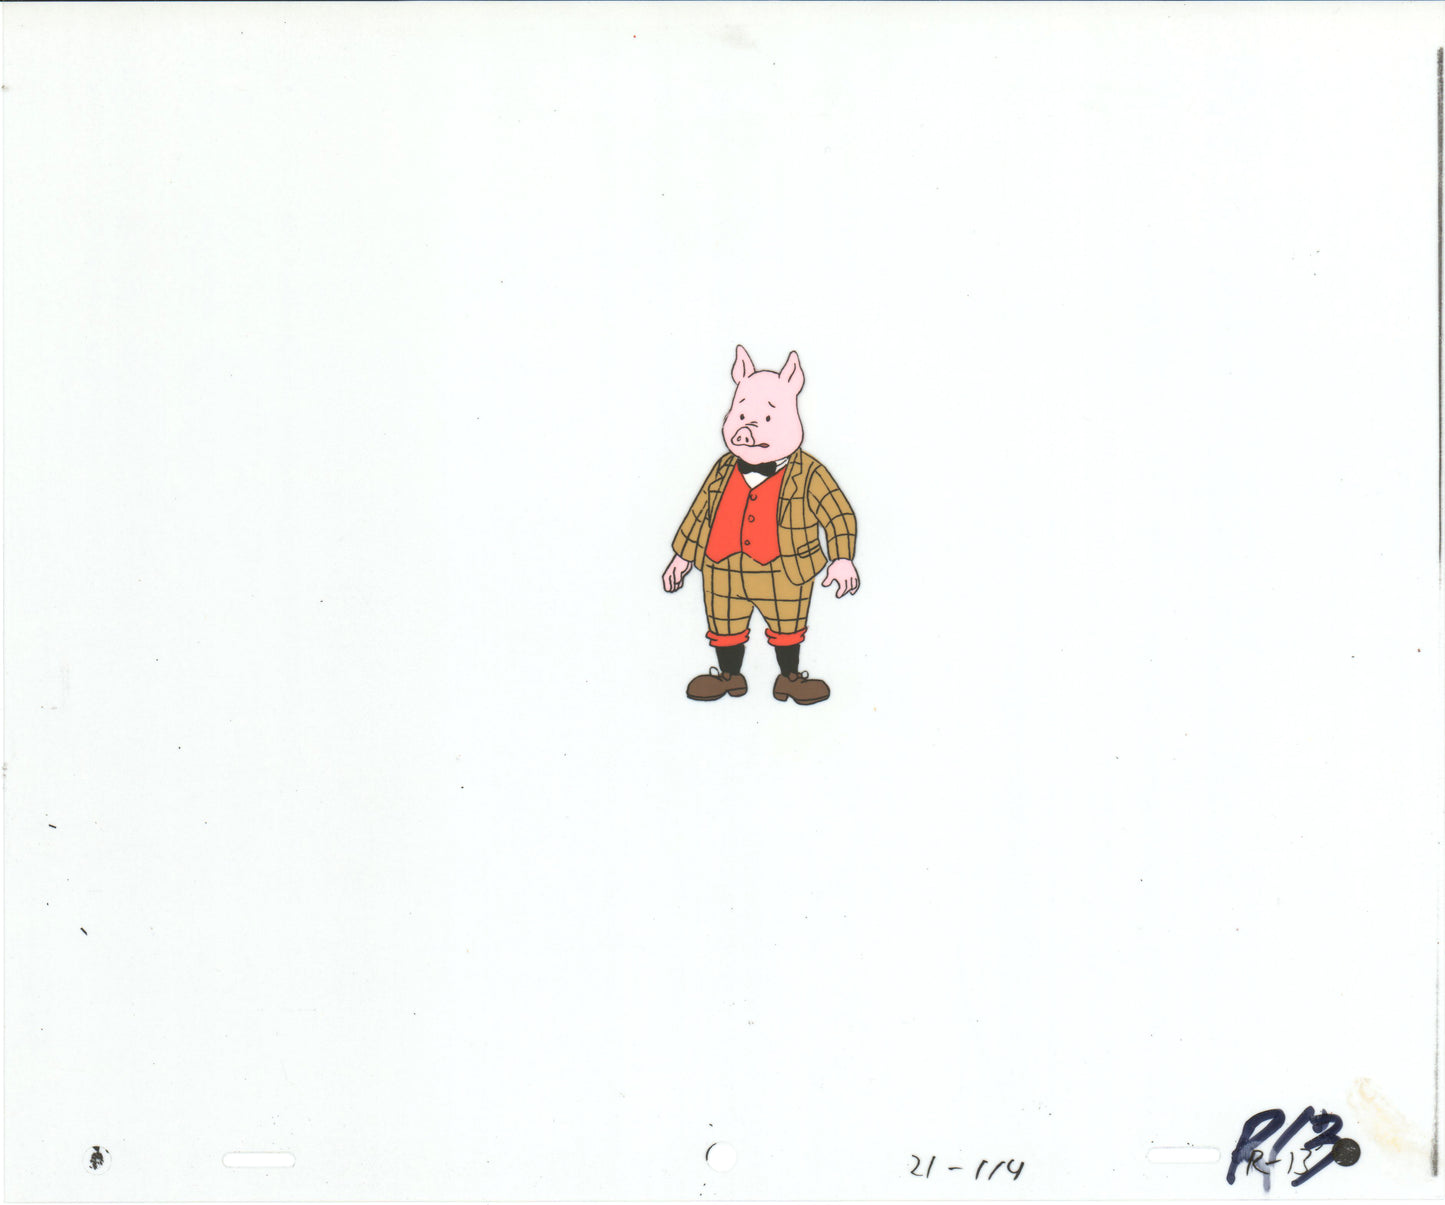 RUPERT Bear Podgy Pig Original Production Animation Cel from the Cartoon by Nelvana Tourtel Animation 1990s 8-331